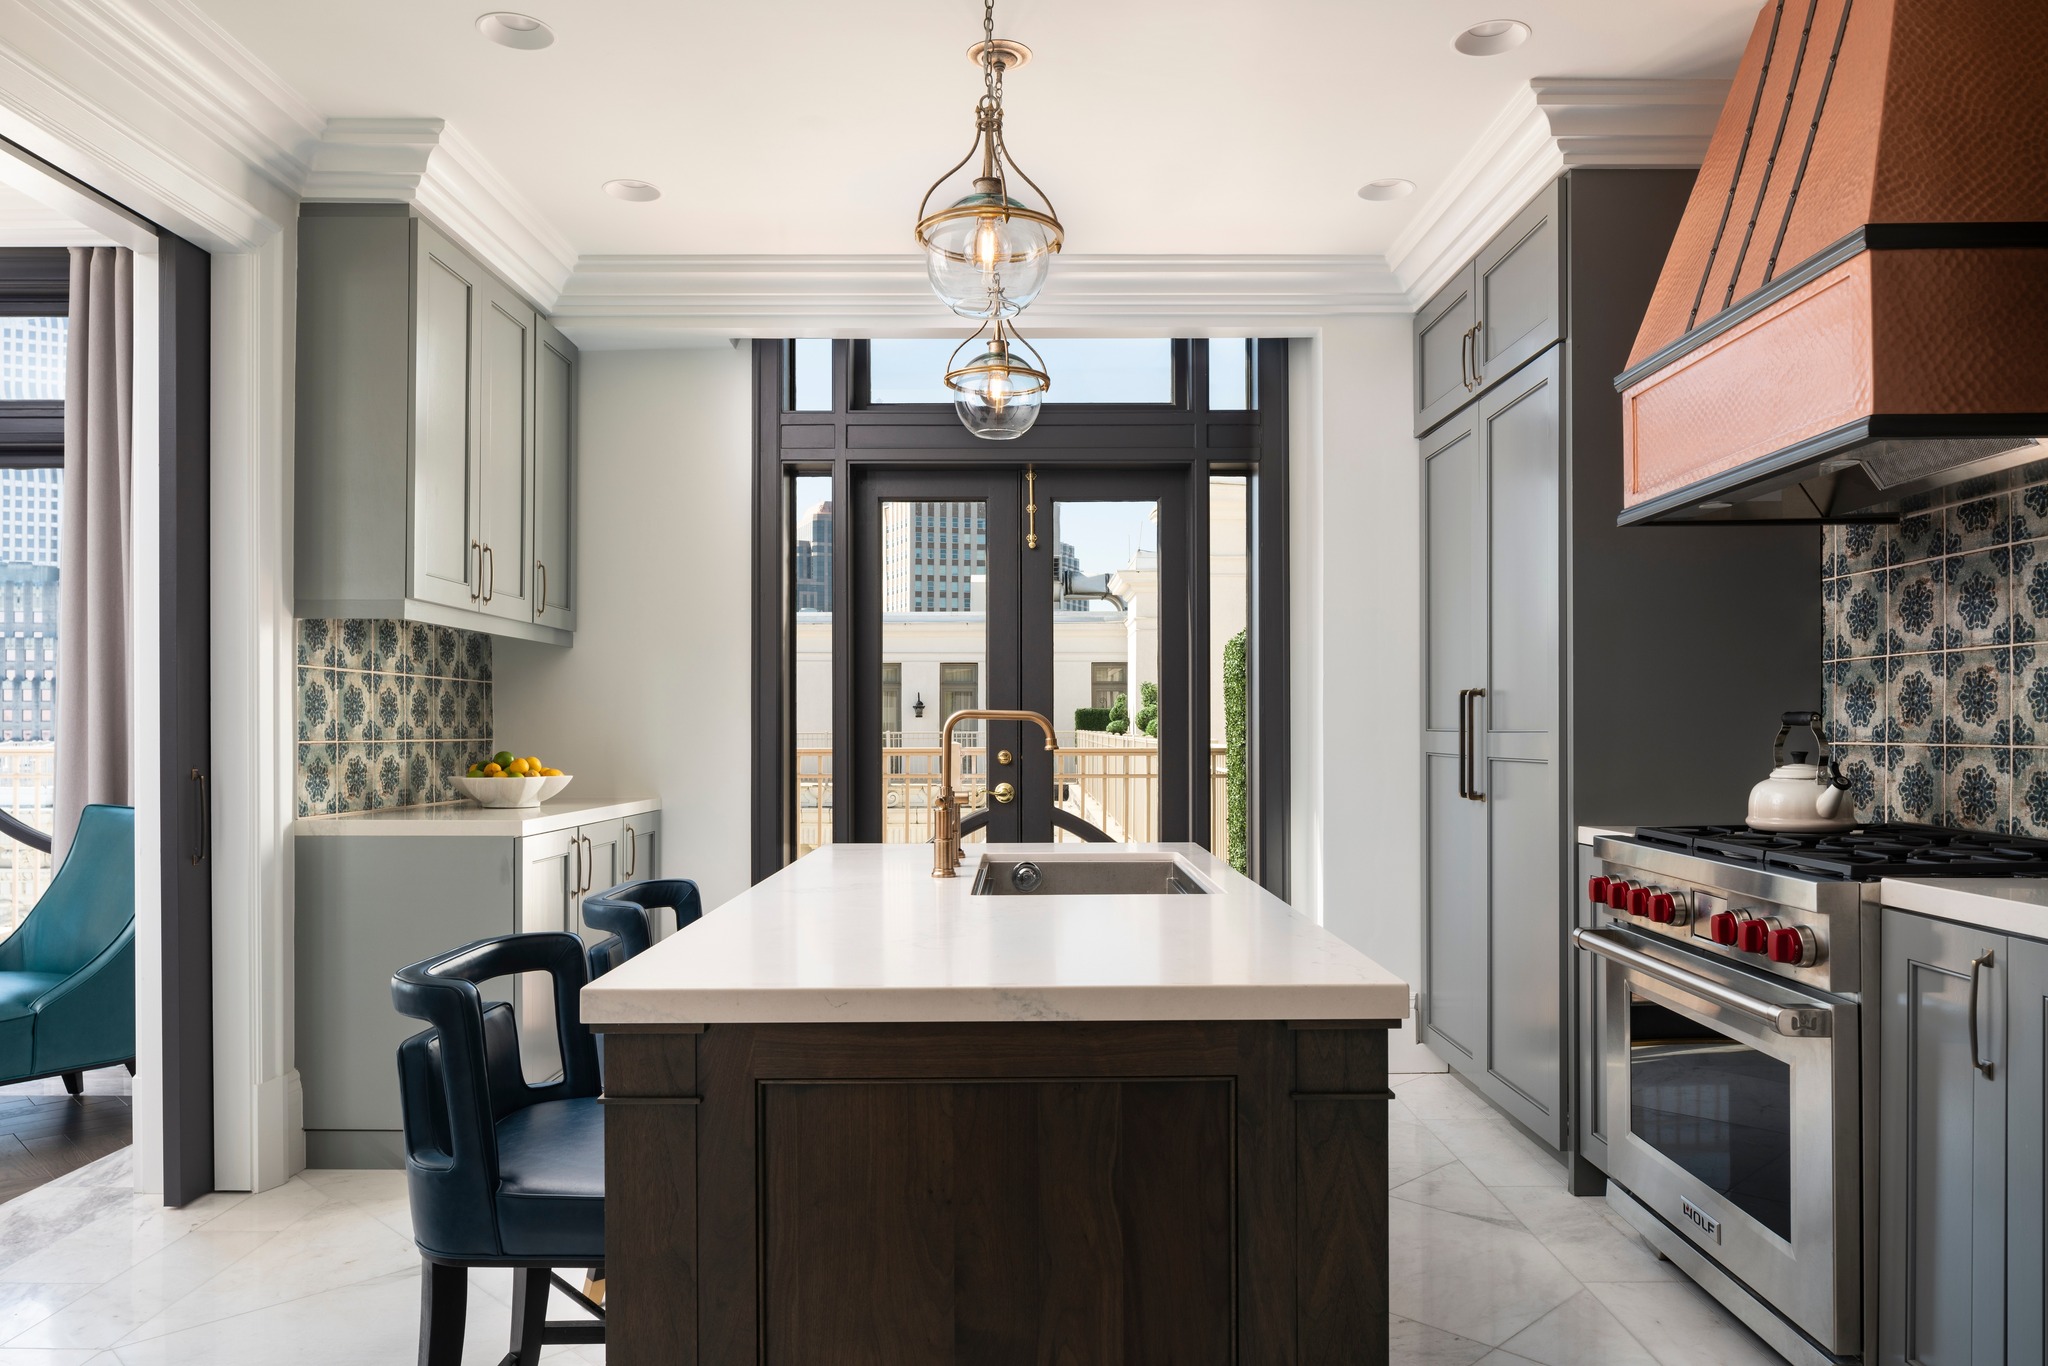 Grey kitchen cabinets kitchen design idea, including country kitchen designs, marble kitchen countertops, beautiful marble backsplash